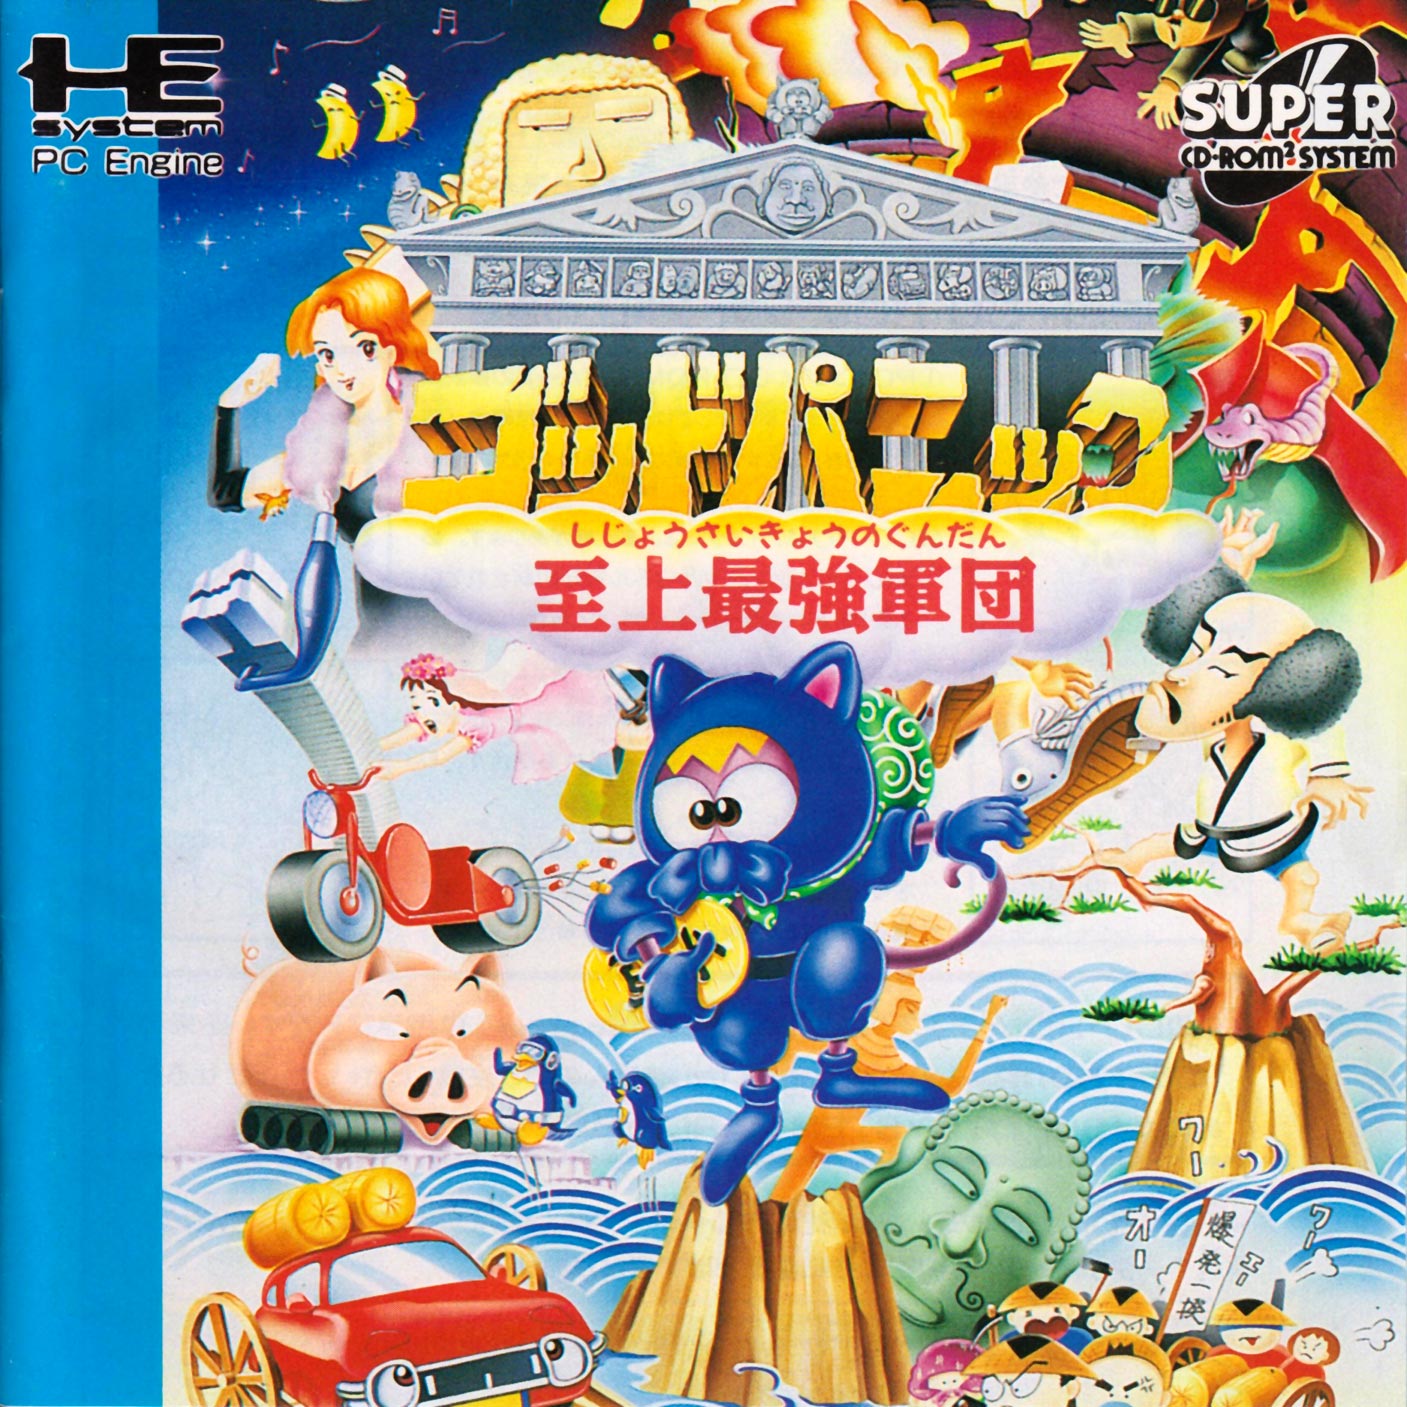 God panic. God Panic: Shijou Saikyou Gundan. PC engine CD. PC engine CD игры. Sega Master System Bank Panic.